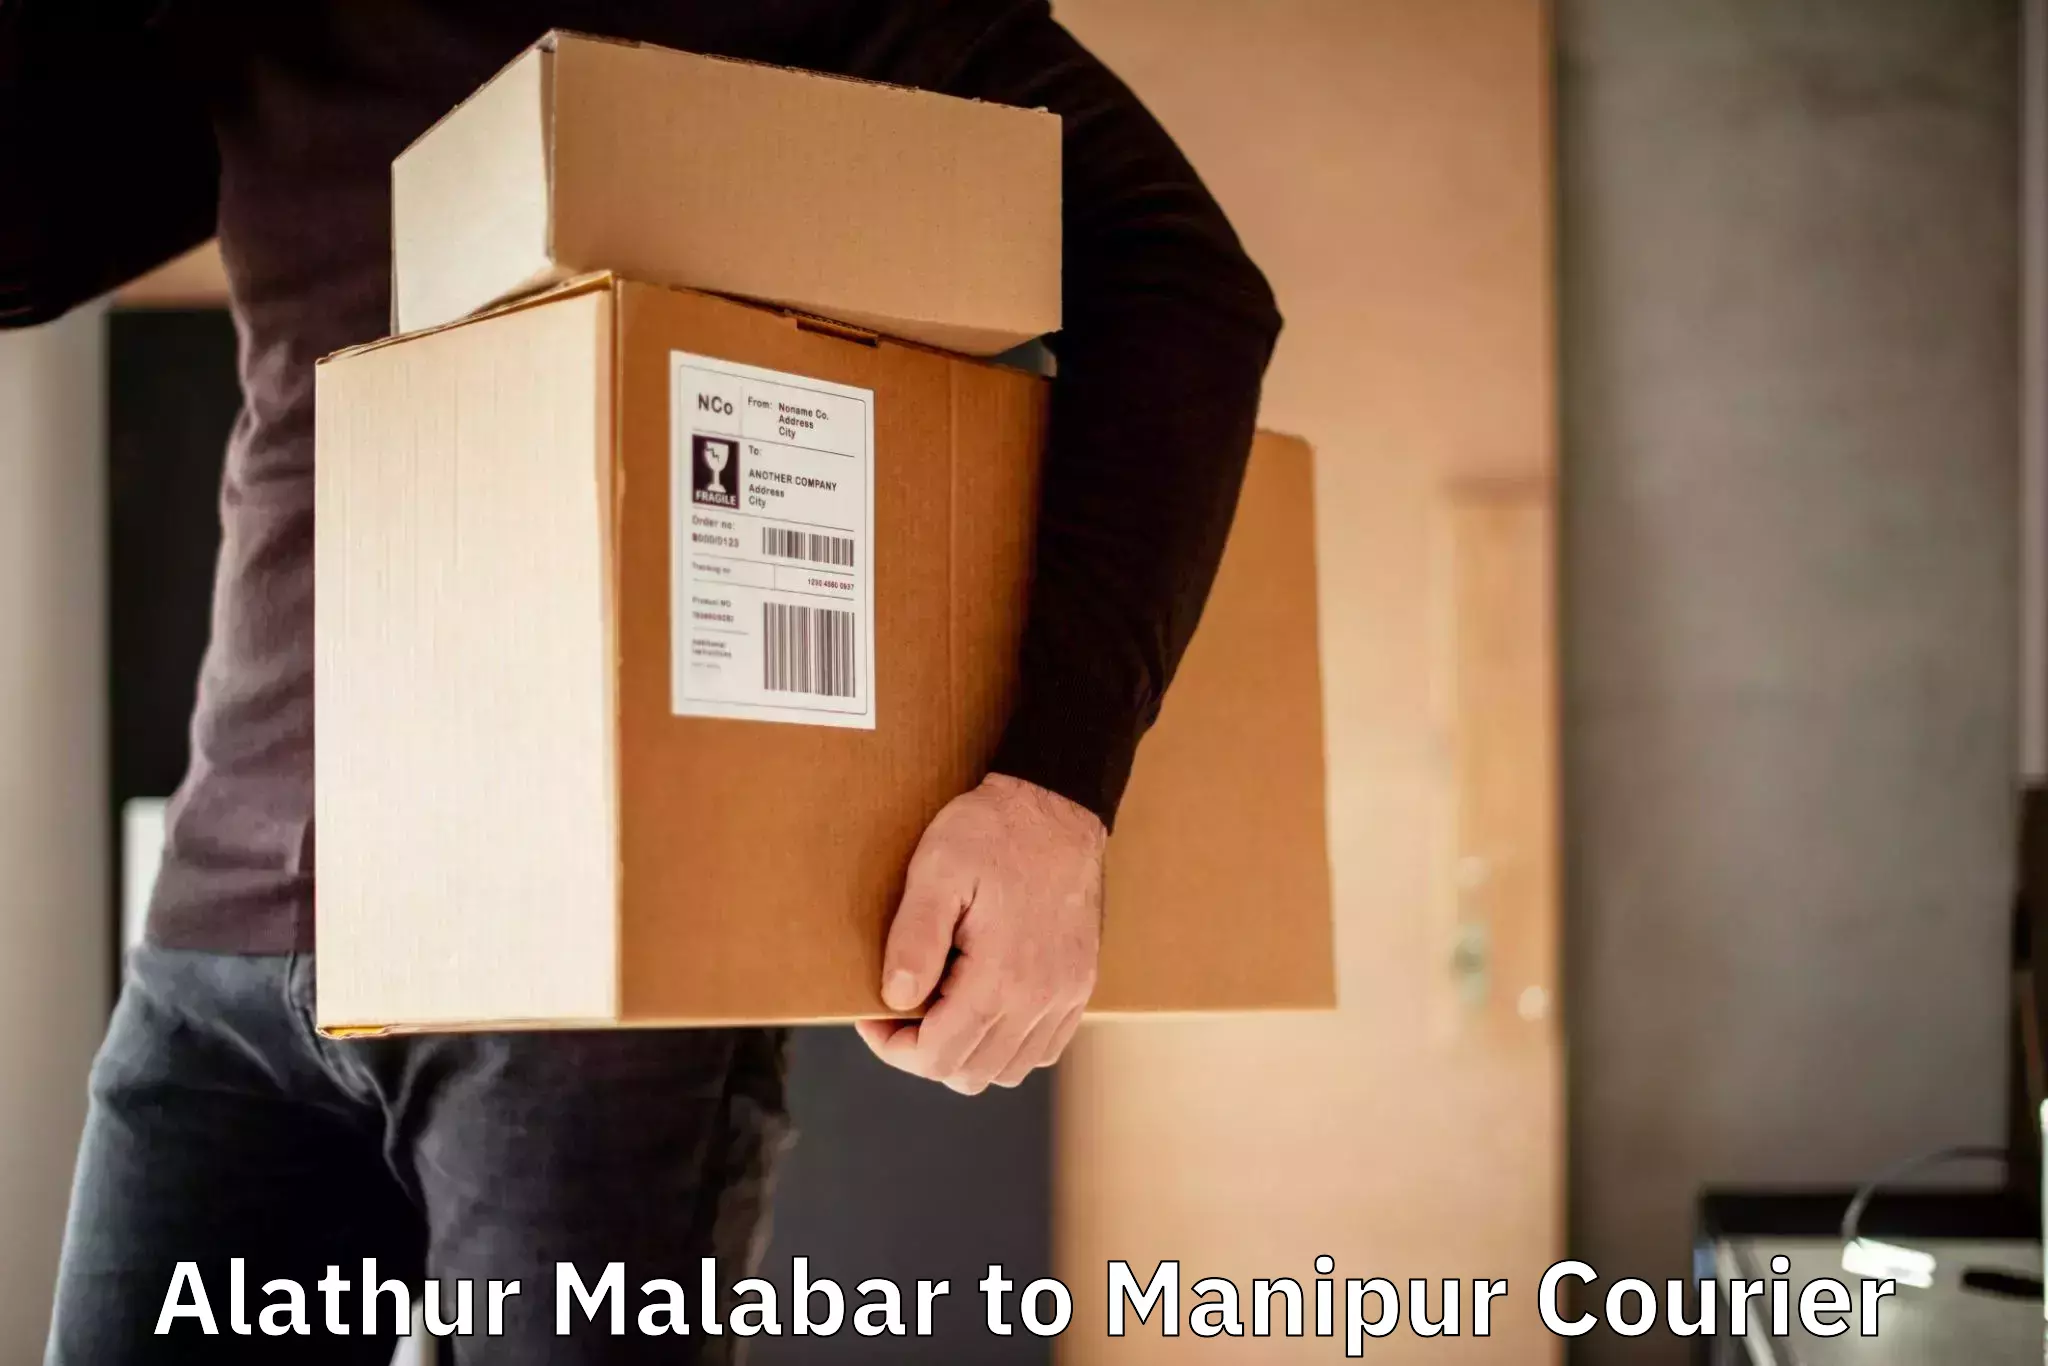 International courier networks Alathur Malabar to Chandel